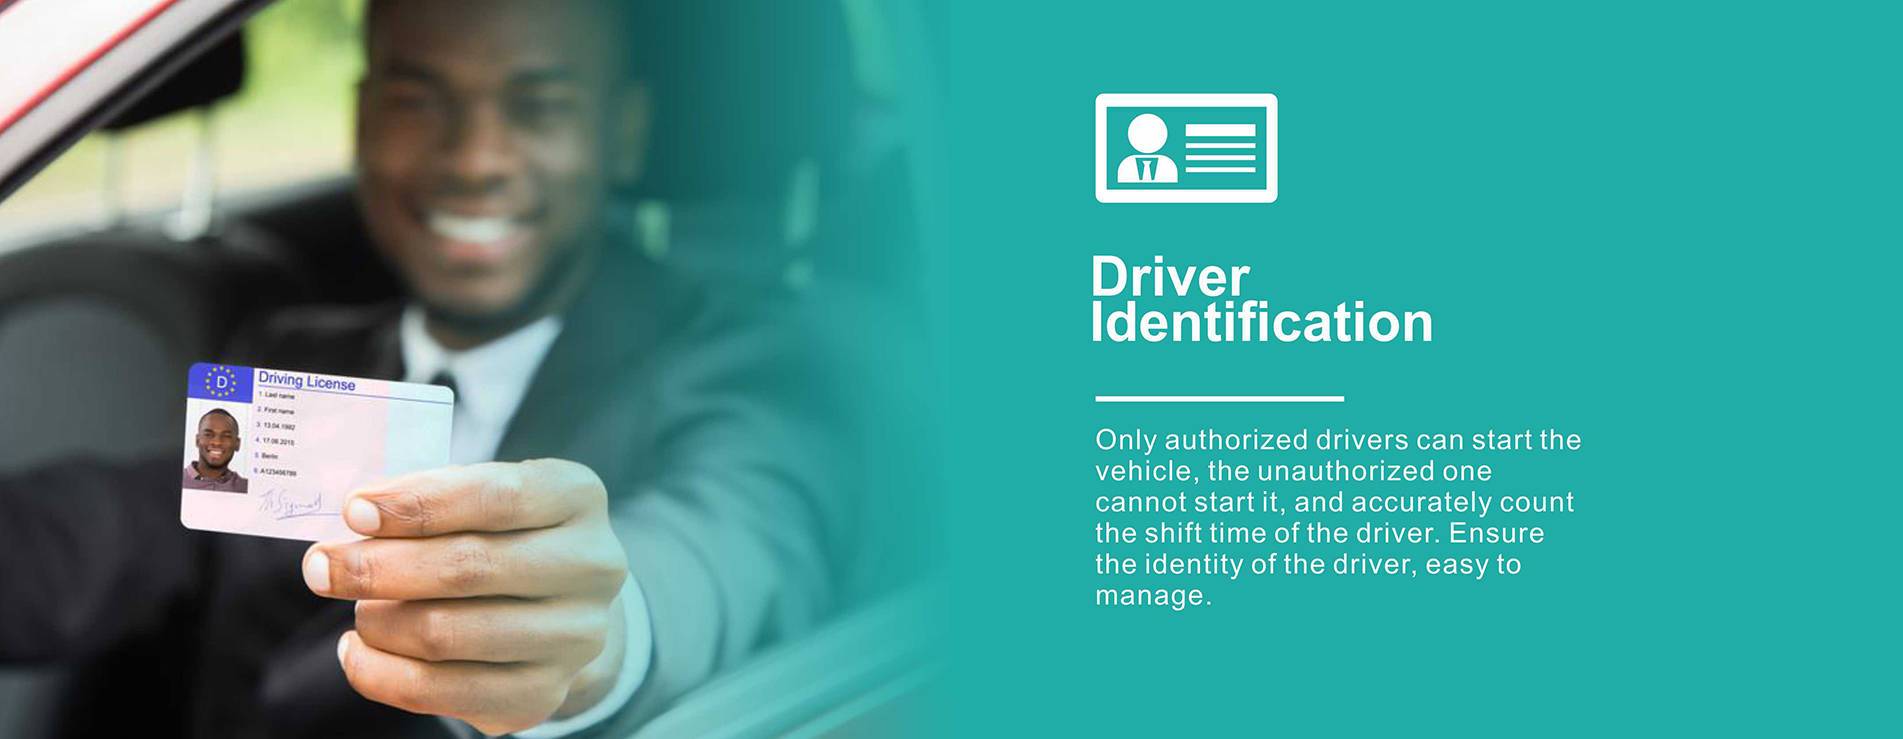 driver identification